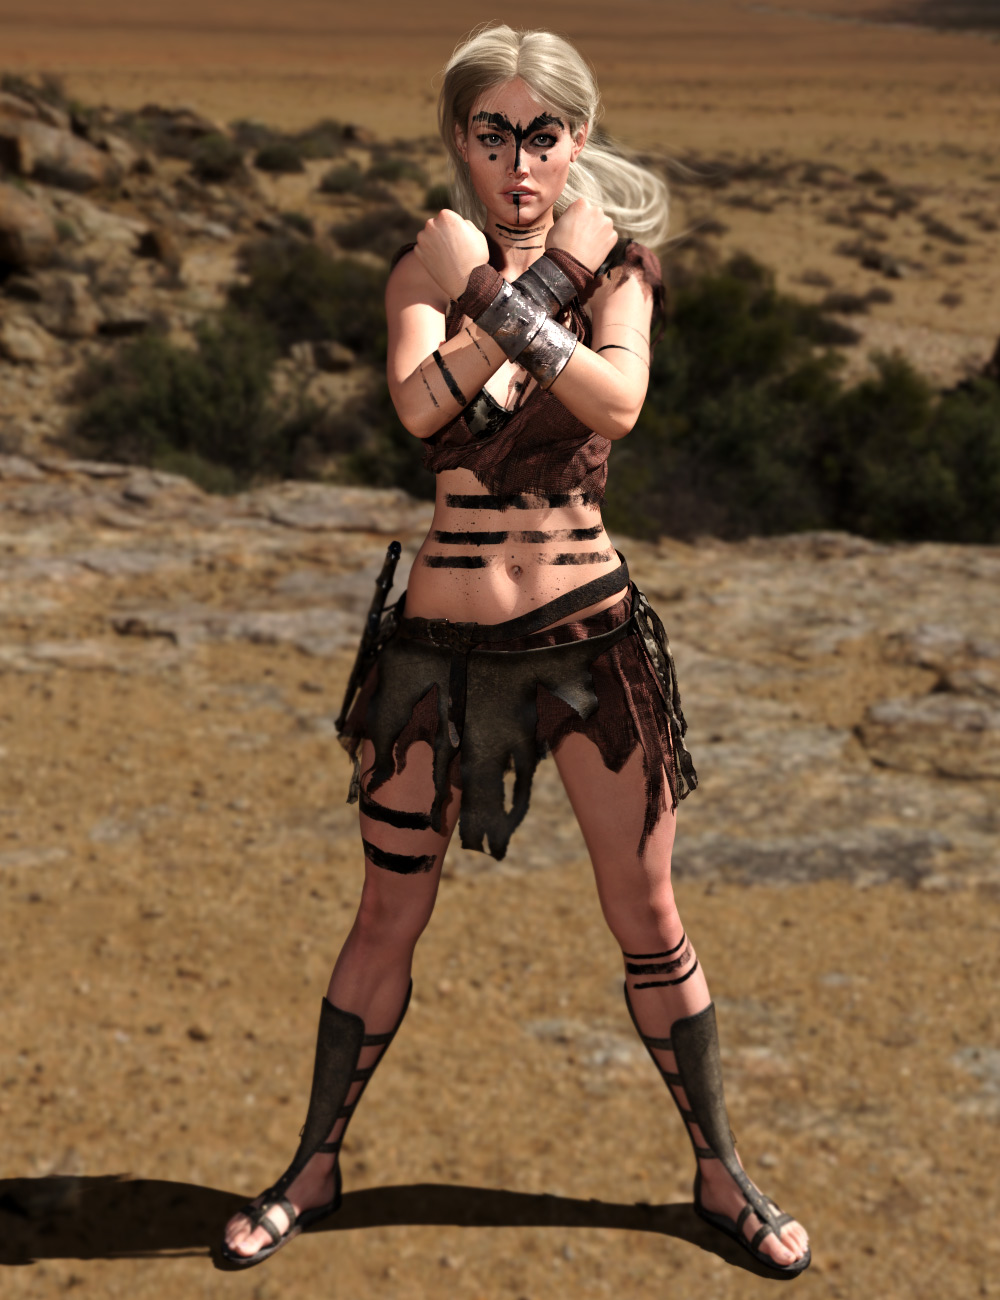 Odeeta HD for Genesis 8 Females by: Eichhorn Art, 3D Models by Daz 3D